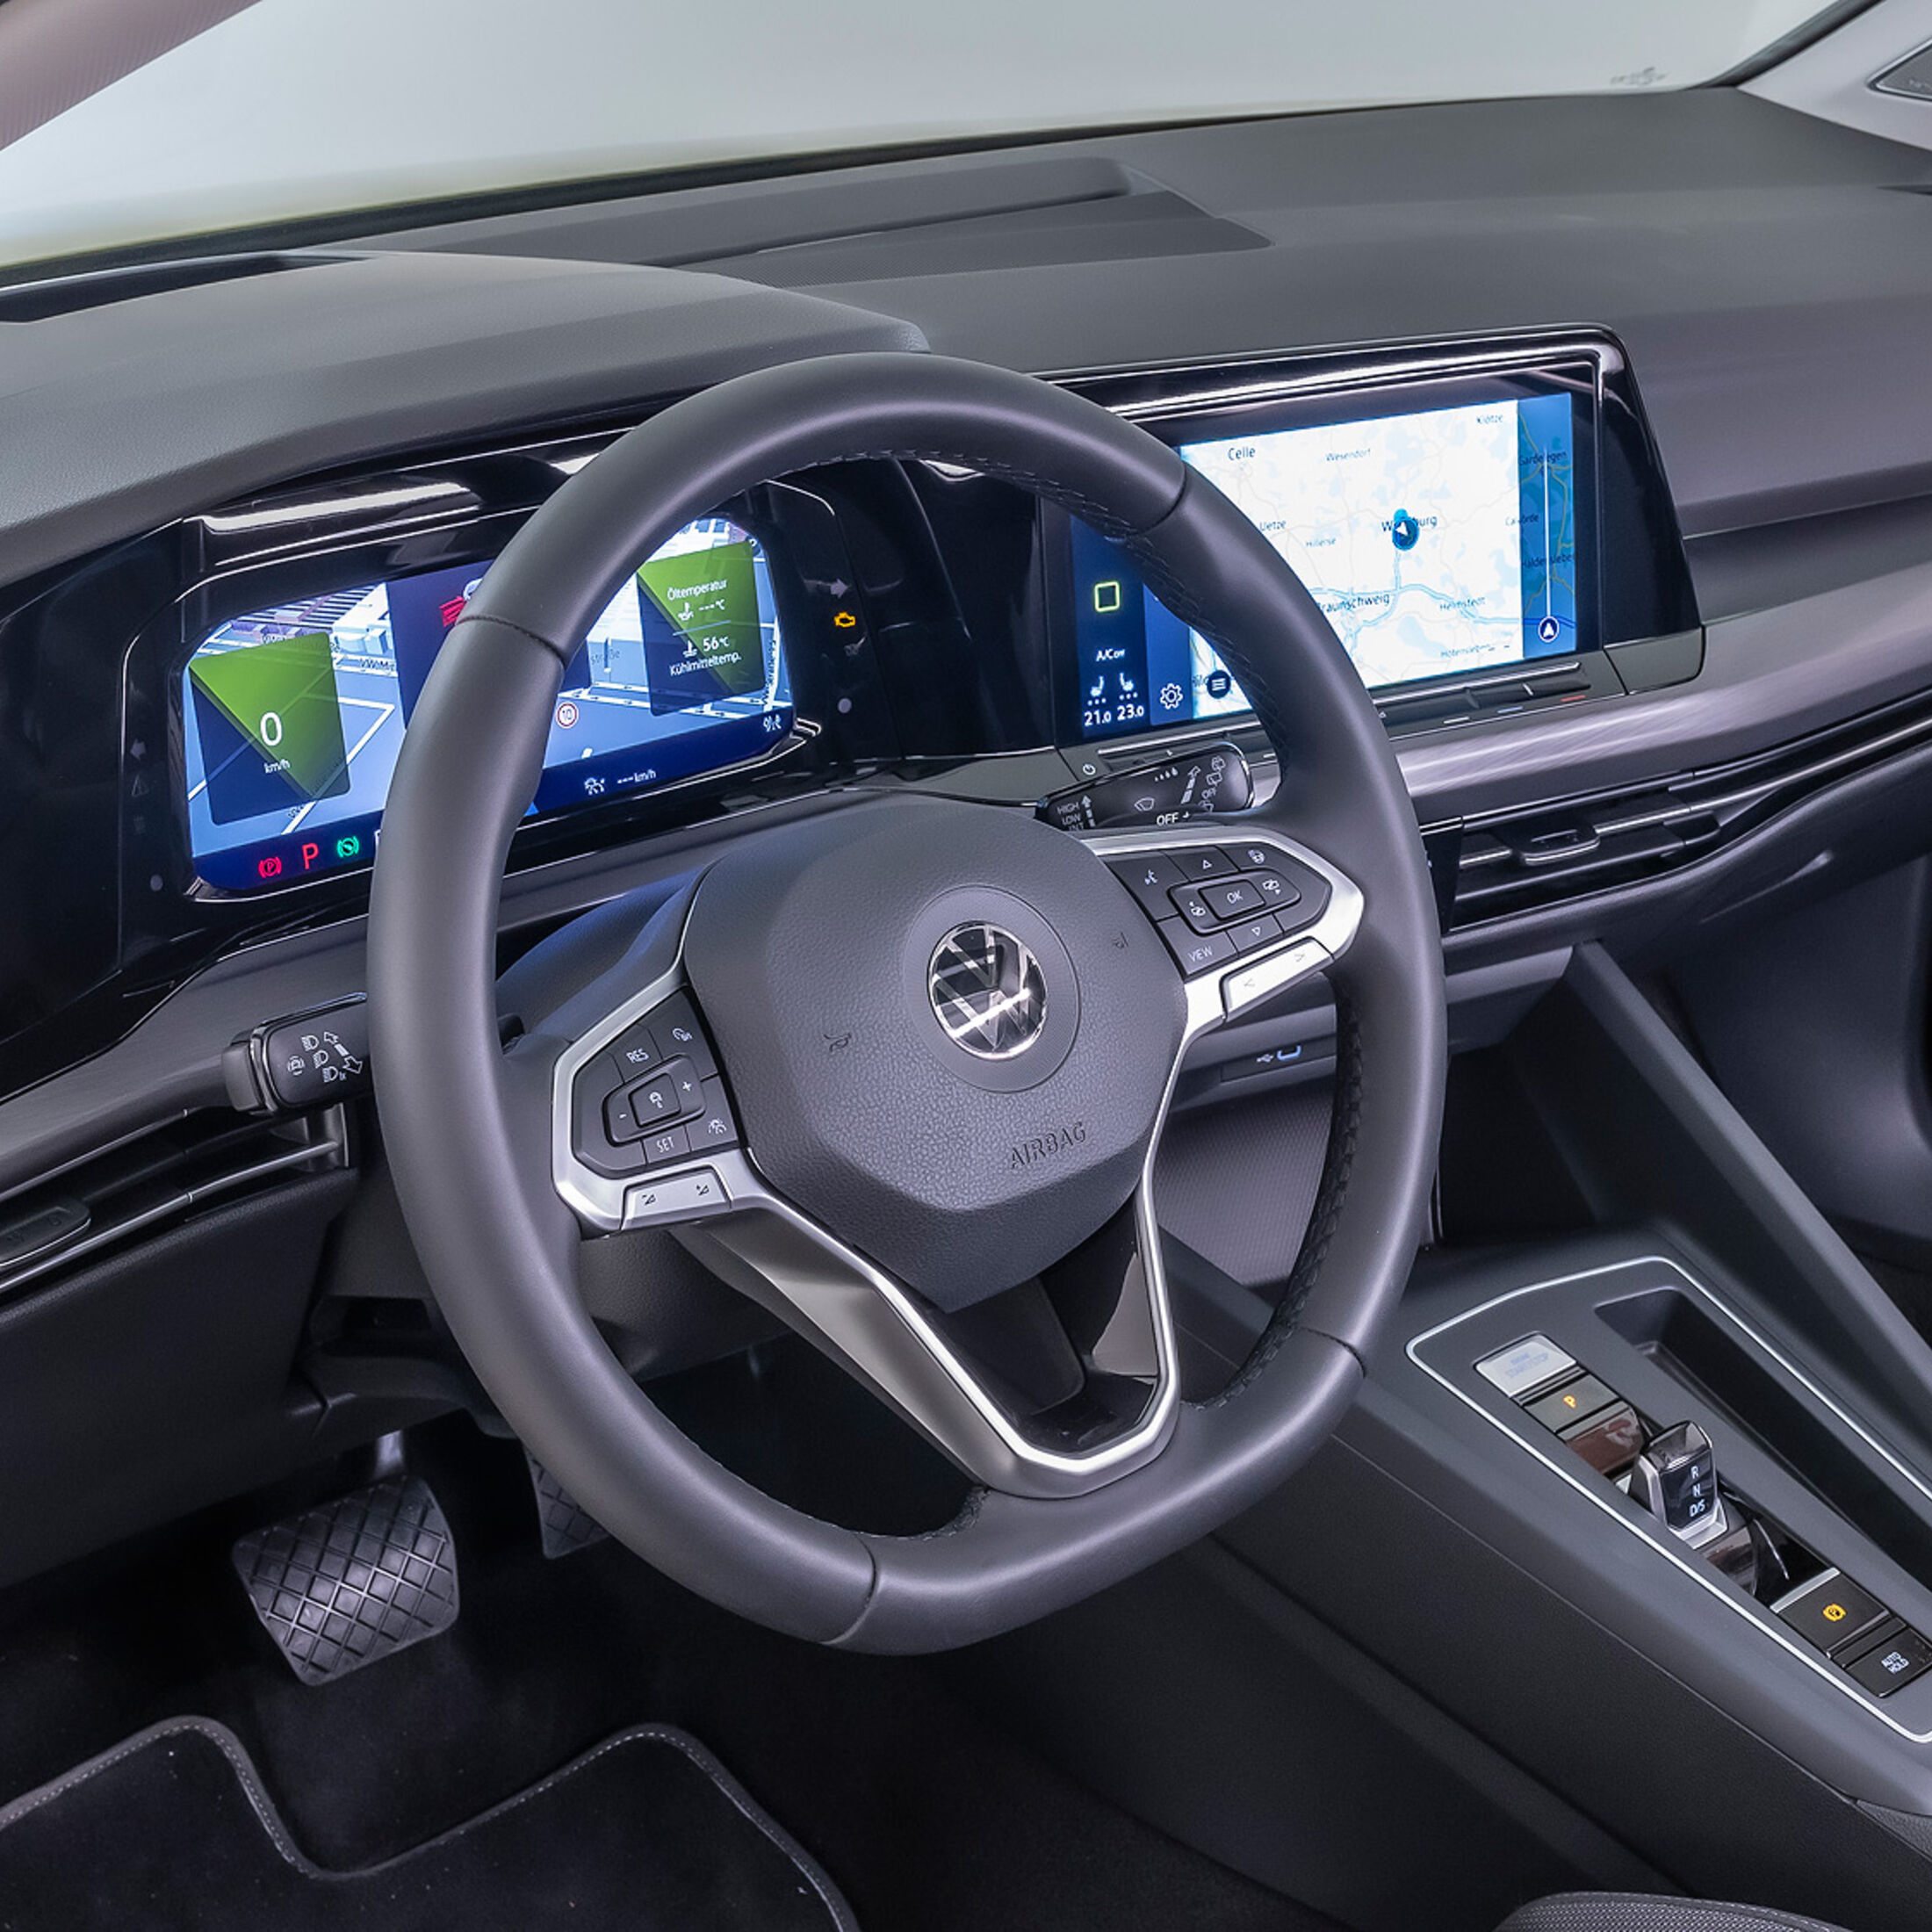 https://imgr1.auto-motor-und-sport.de/VW-Golf-8-Cockpit-Infotainment-Bedienkonzept-jsonLd1x1-1e4d79ed-1650770.jpg